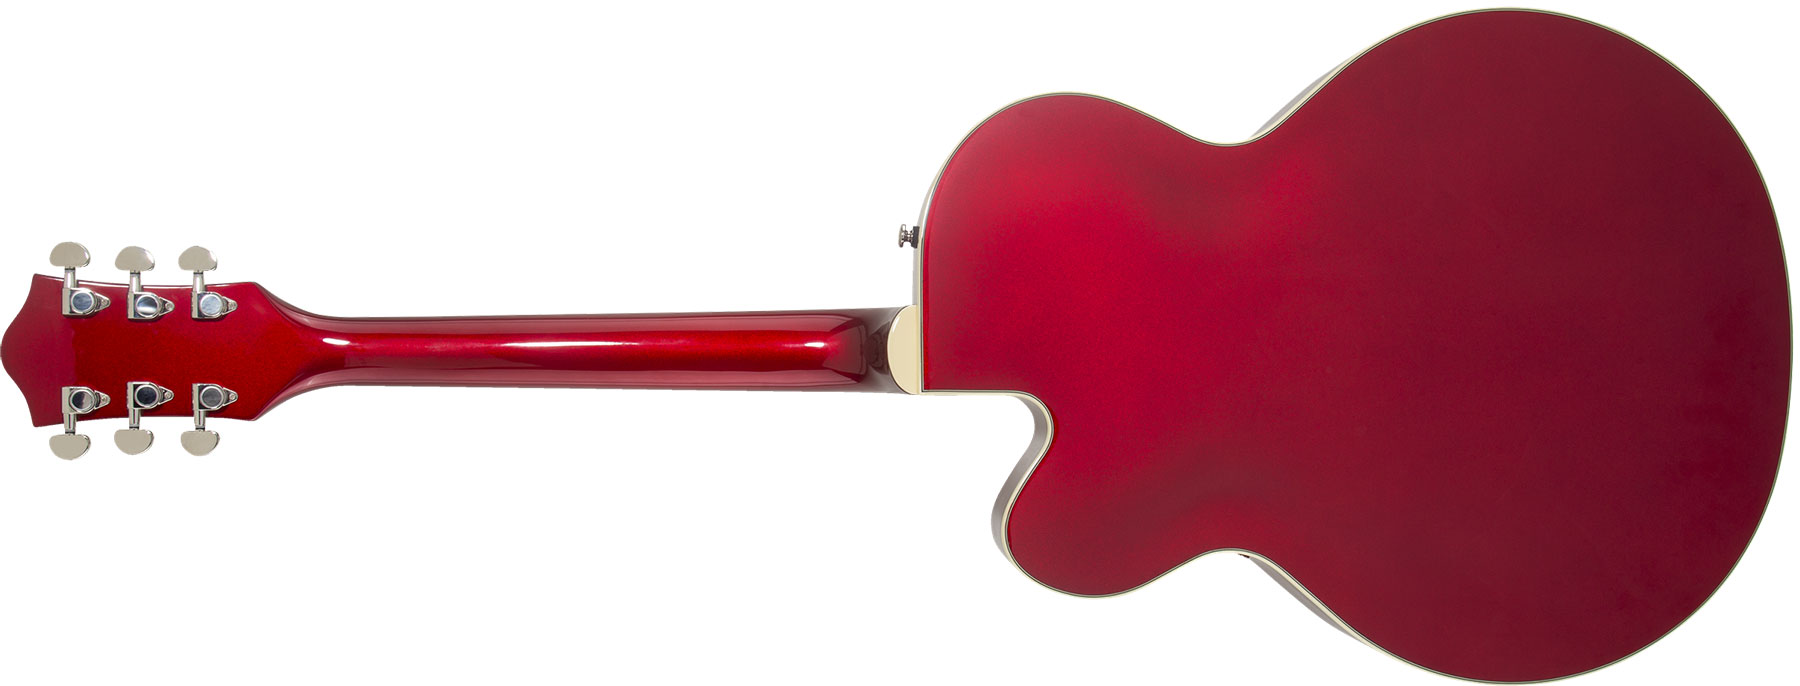 Gretsch G2420t Streamliner Hollow Body Bigsby Hh Trem Lau - Candy Apple Red - Semi hollow elektriche gitaar - Variation 1